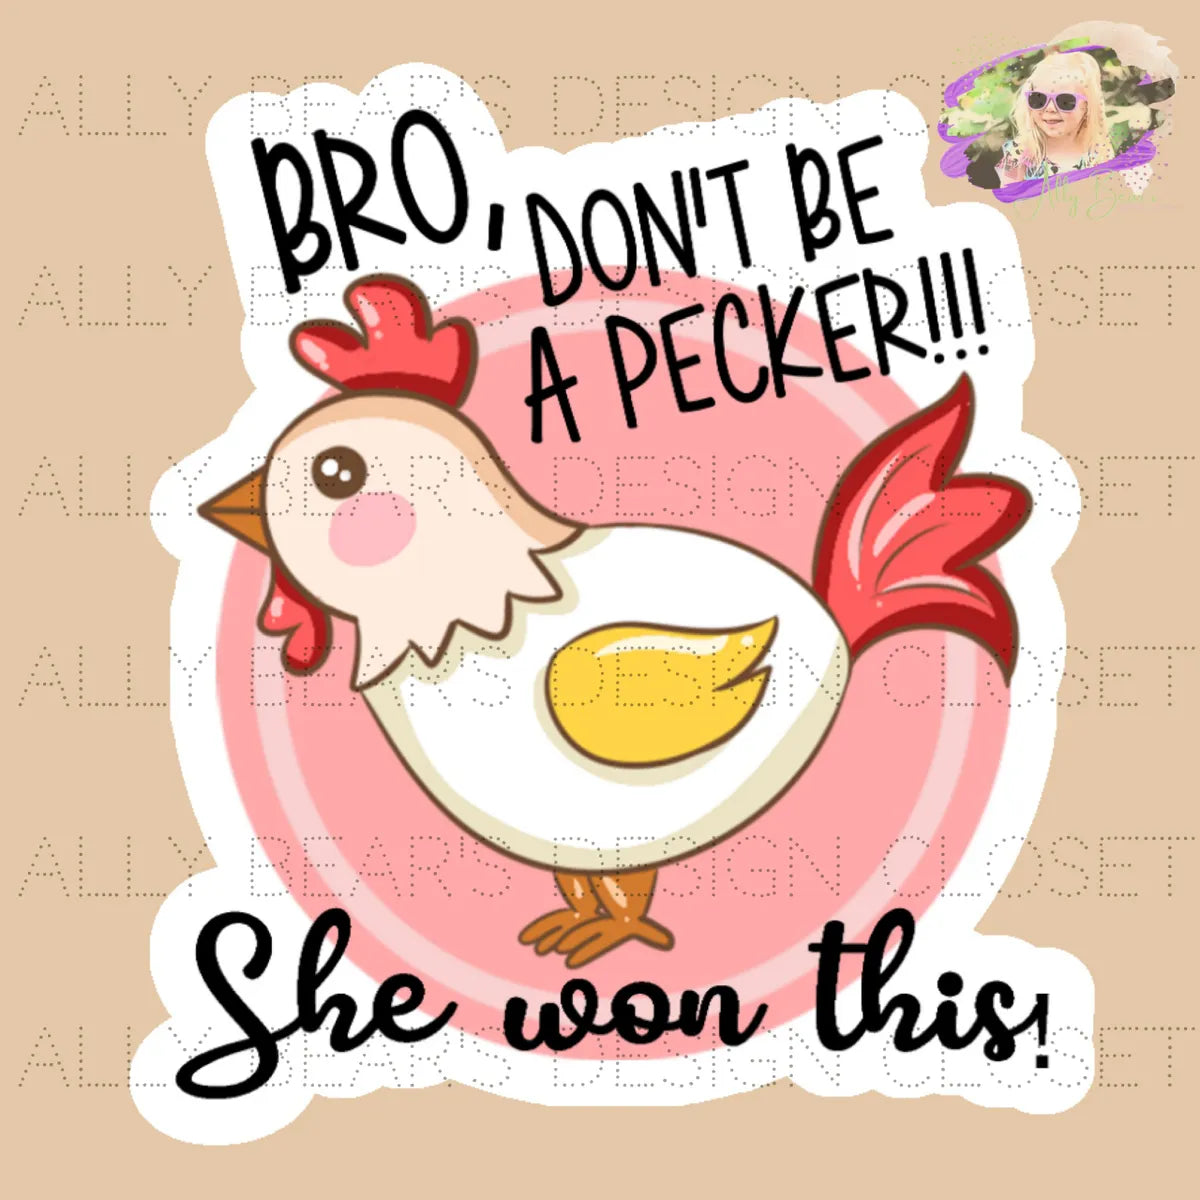 Don’t Be a Pecker